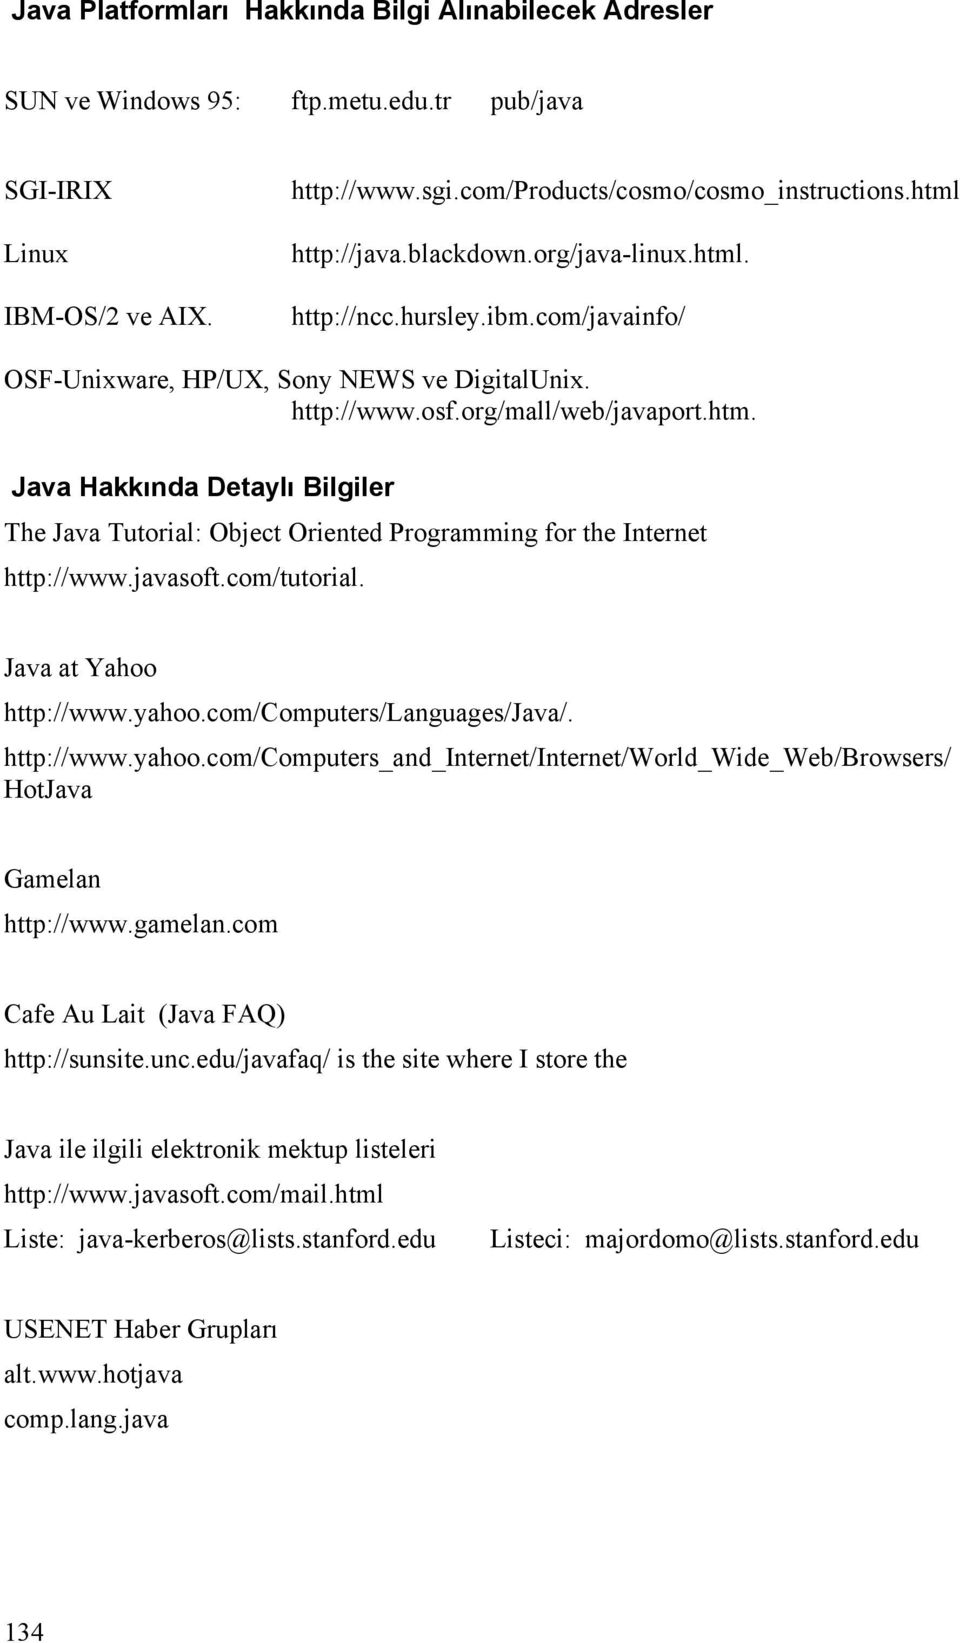 javasoft.com/tutorial. Java at Yahoo http://www.yahoo.com/computers/languages/java/. http://www.yahoo.com/computers_and_internet/internet/world_wide_web/browsers/ HotJava Gamelan http://www.gamelan.